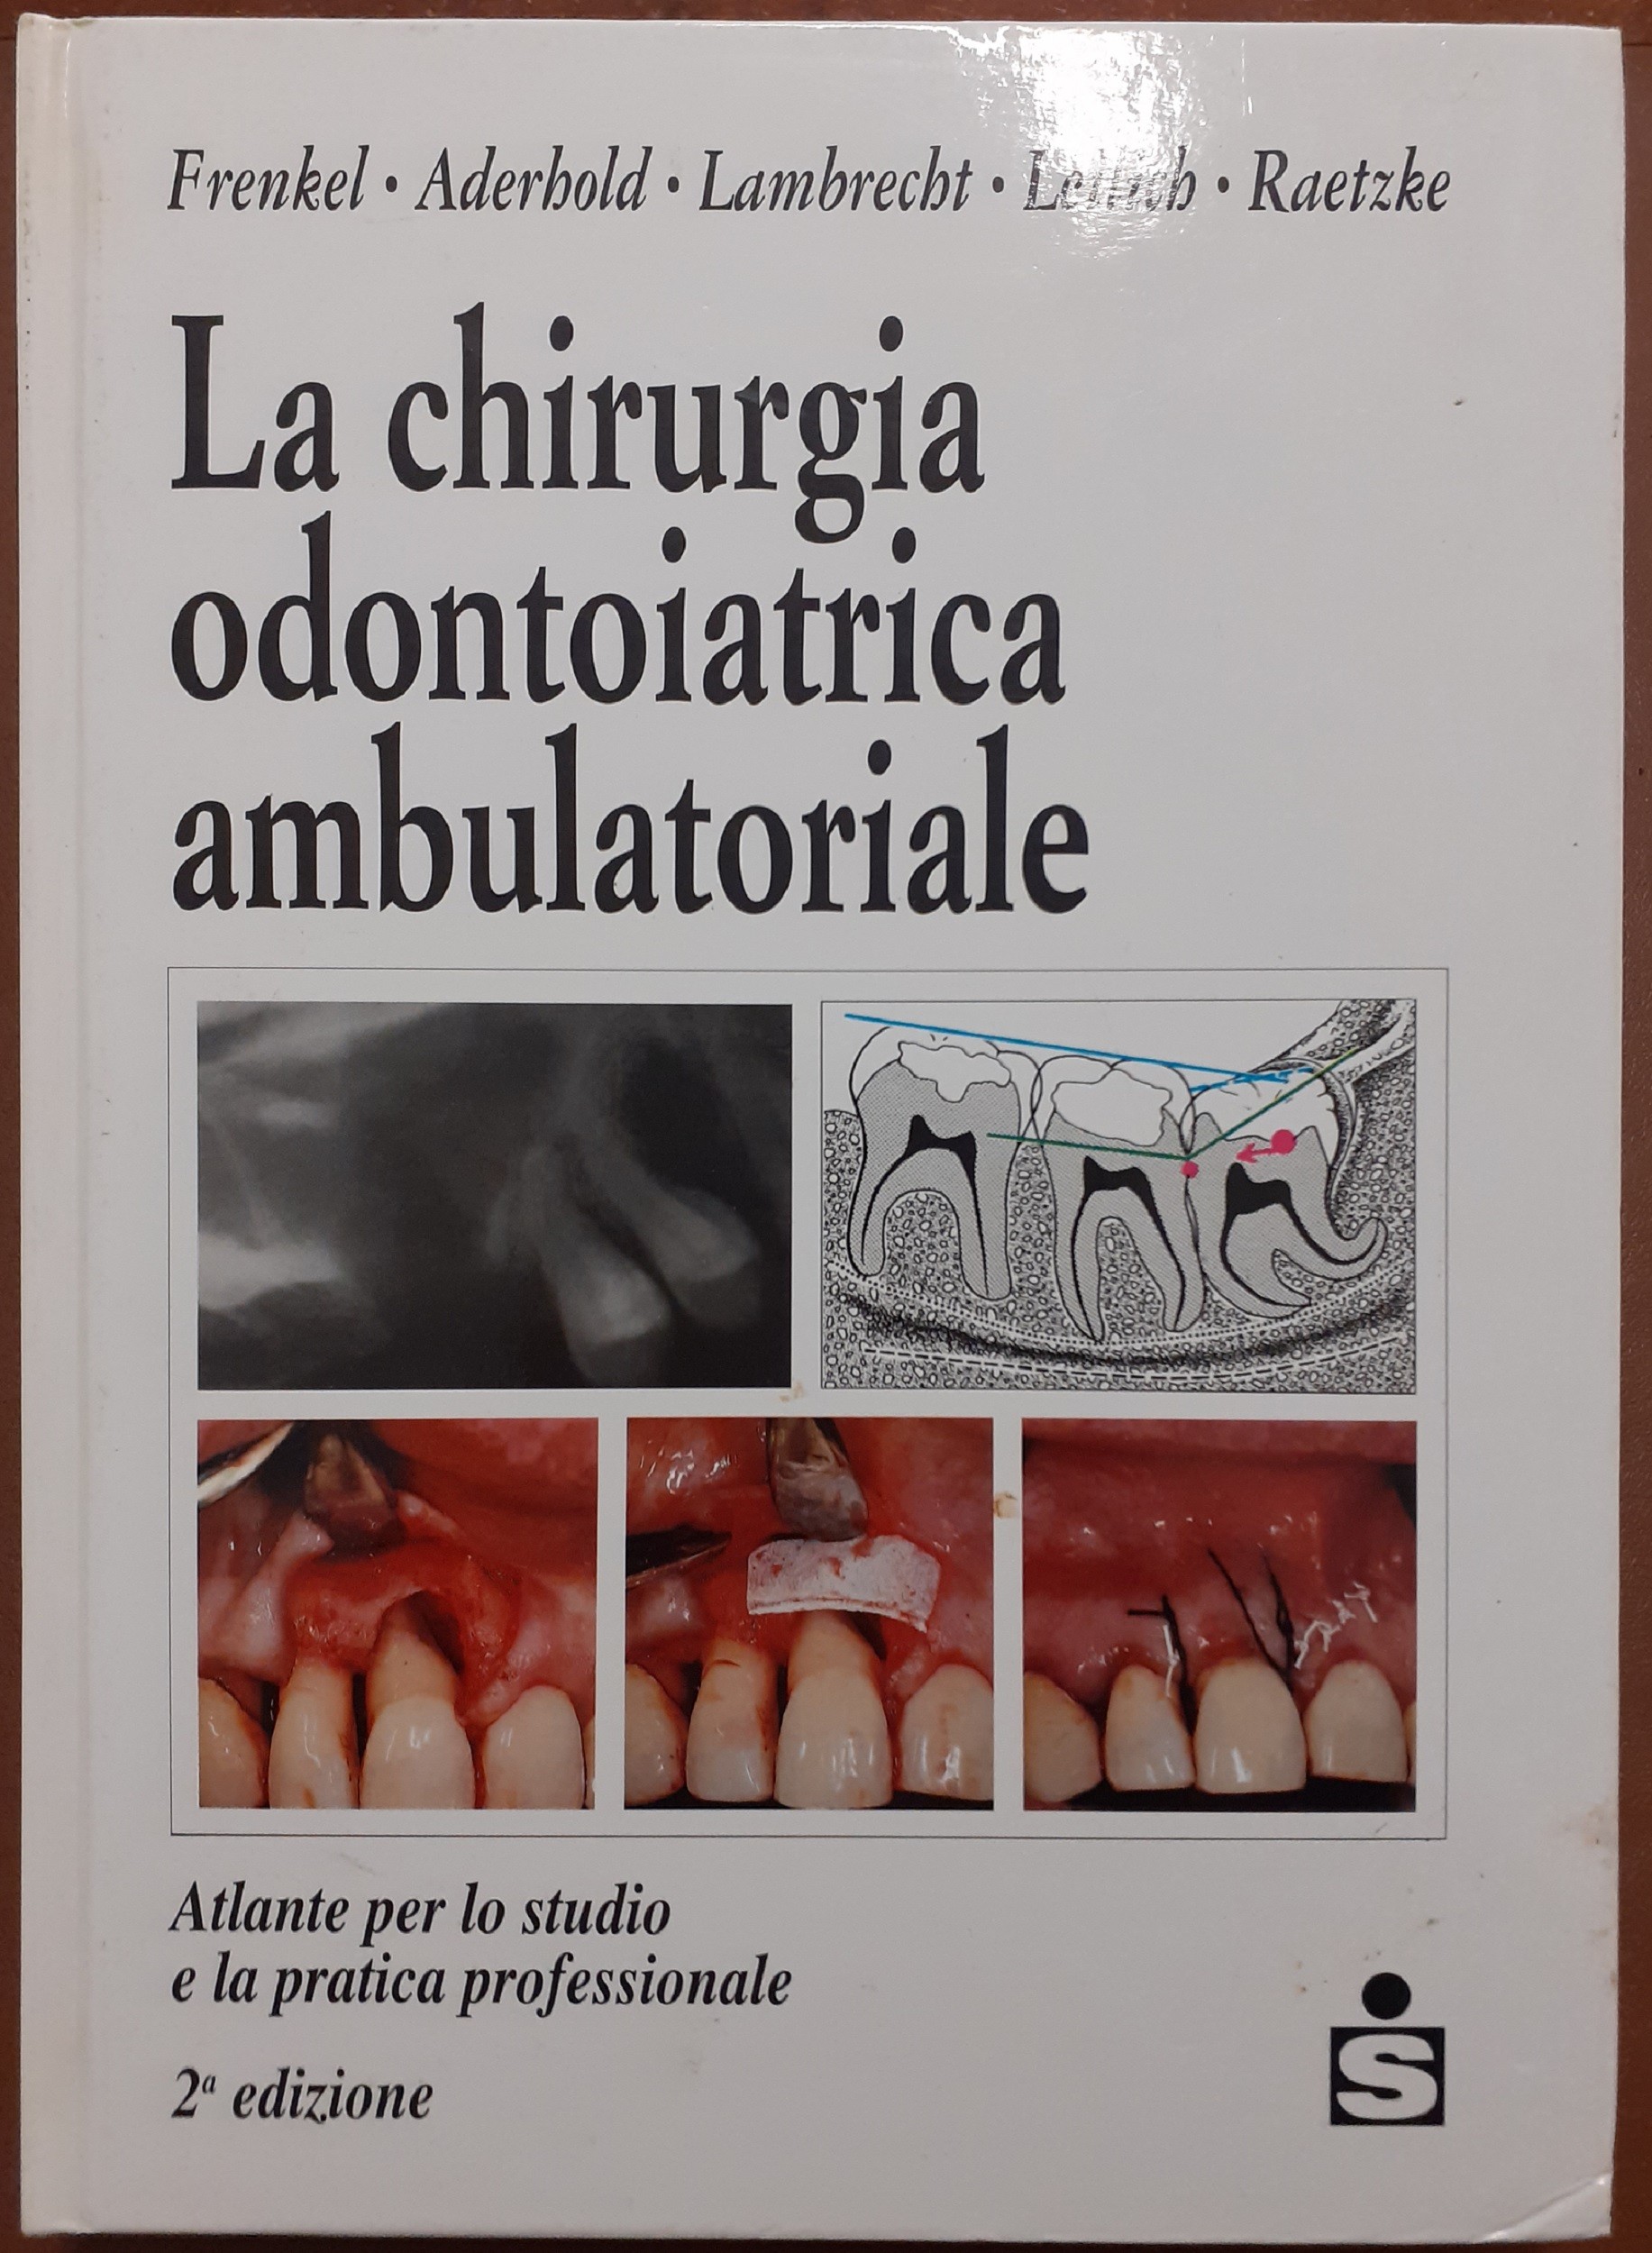 Frenkel et al., La chirurgia odontoiatrica ambulatoriale